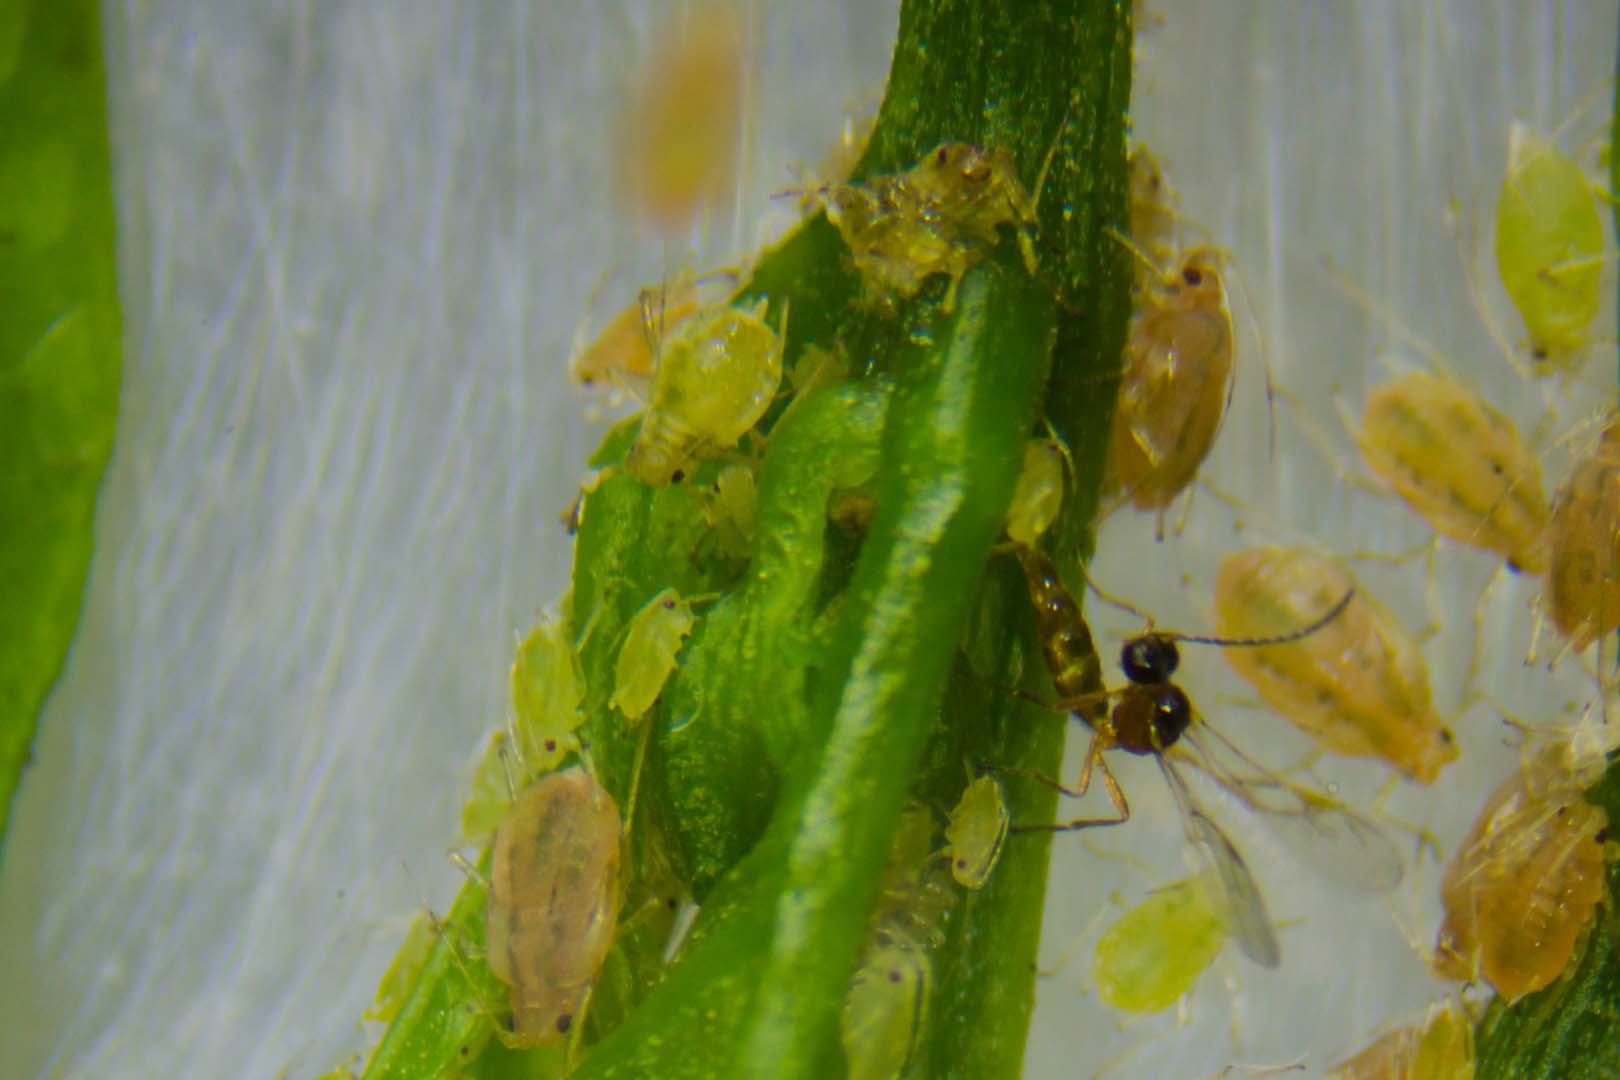 avispa atacando pulgones sobre brocoli